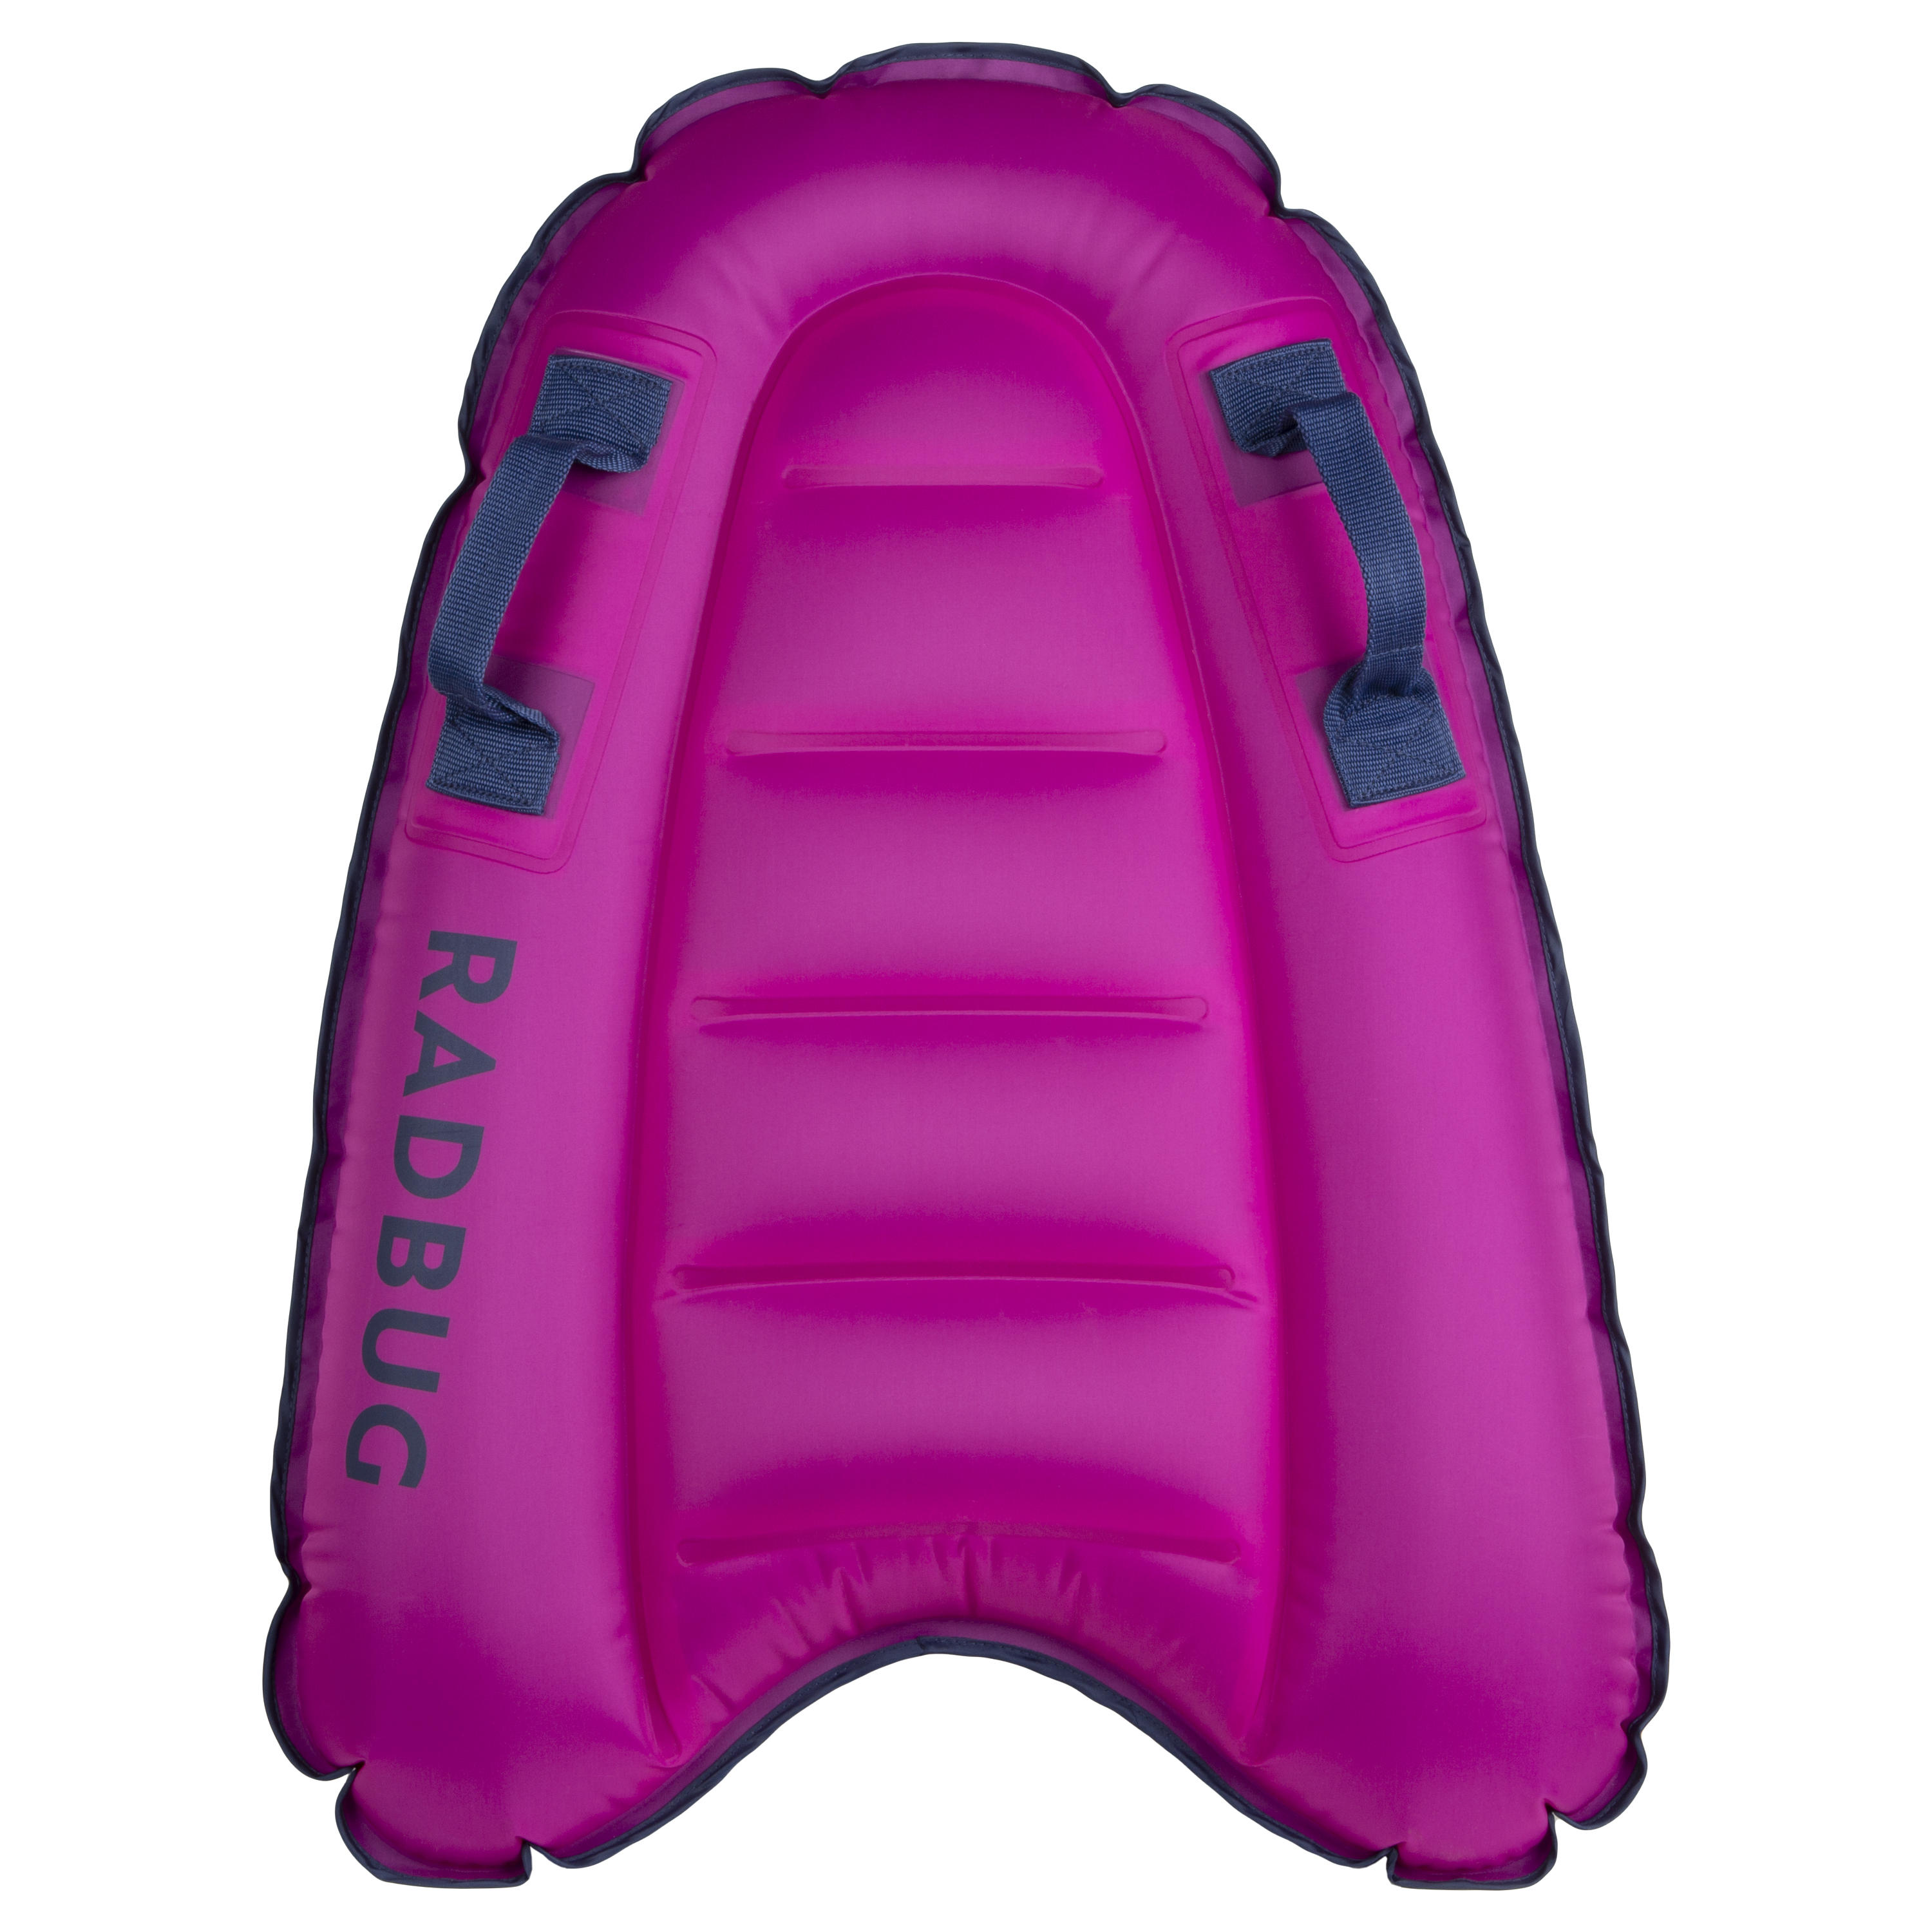 RADBUG Bodyboard aufblasbar Kinder 15–25 kg rosa XS